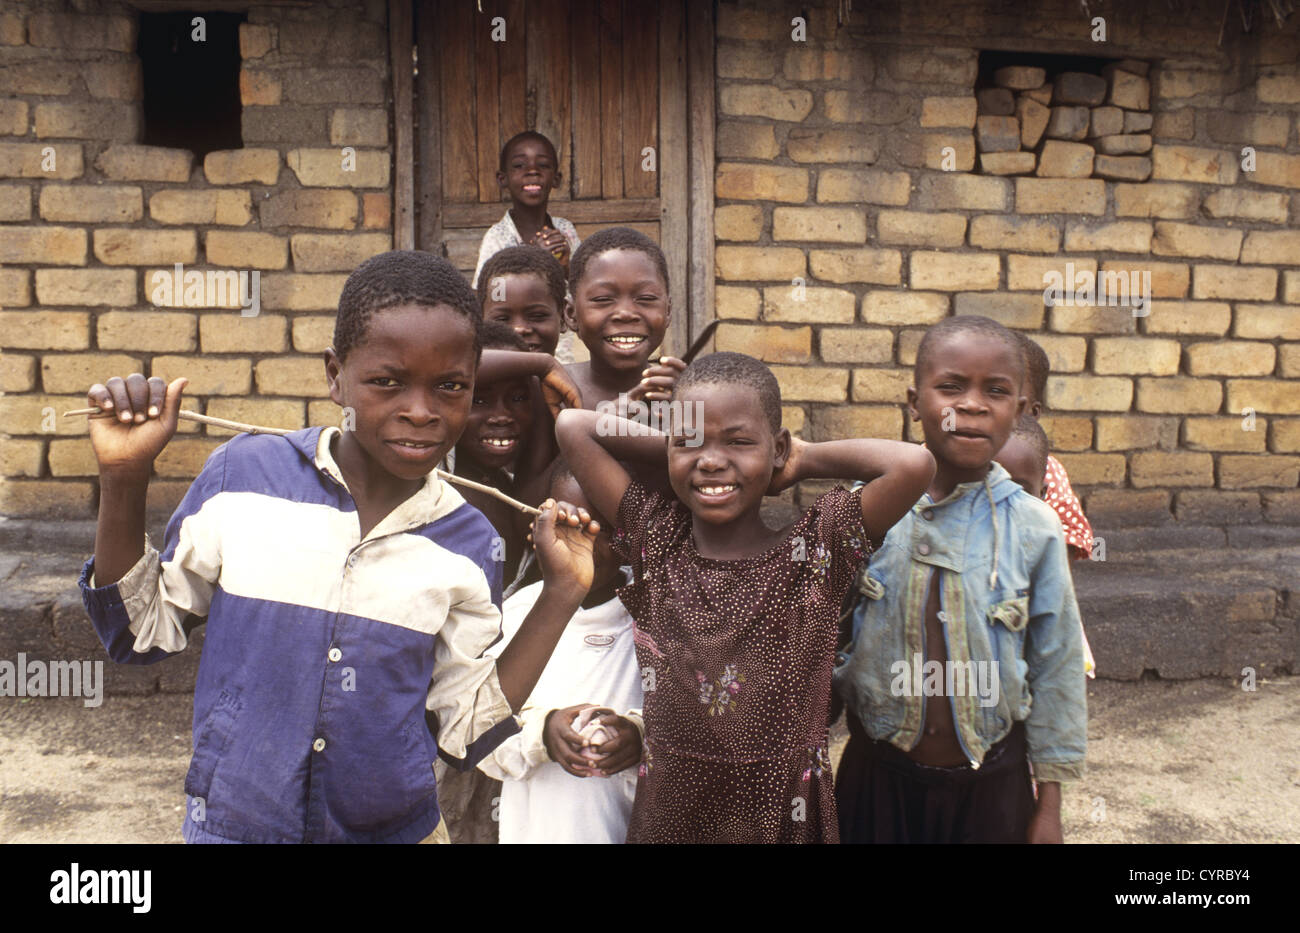 Children pose together for the camera in a typical village setting - Nkhotakota, Lake Malawi, Malawi Stock Photo